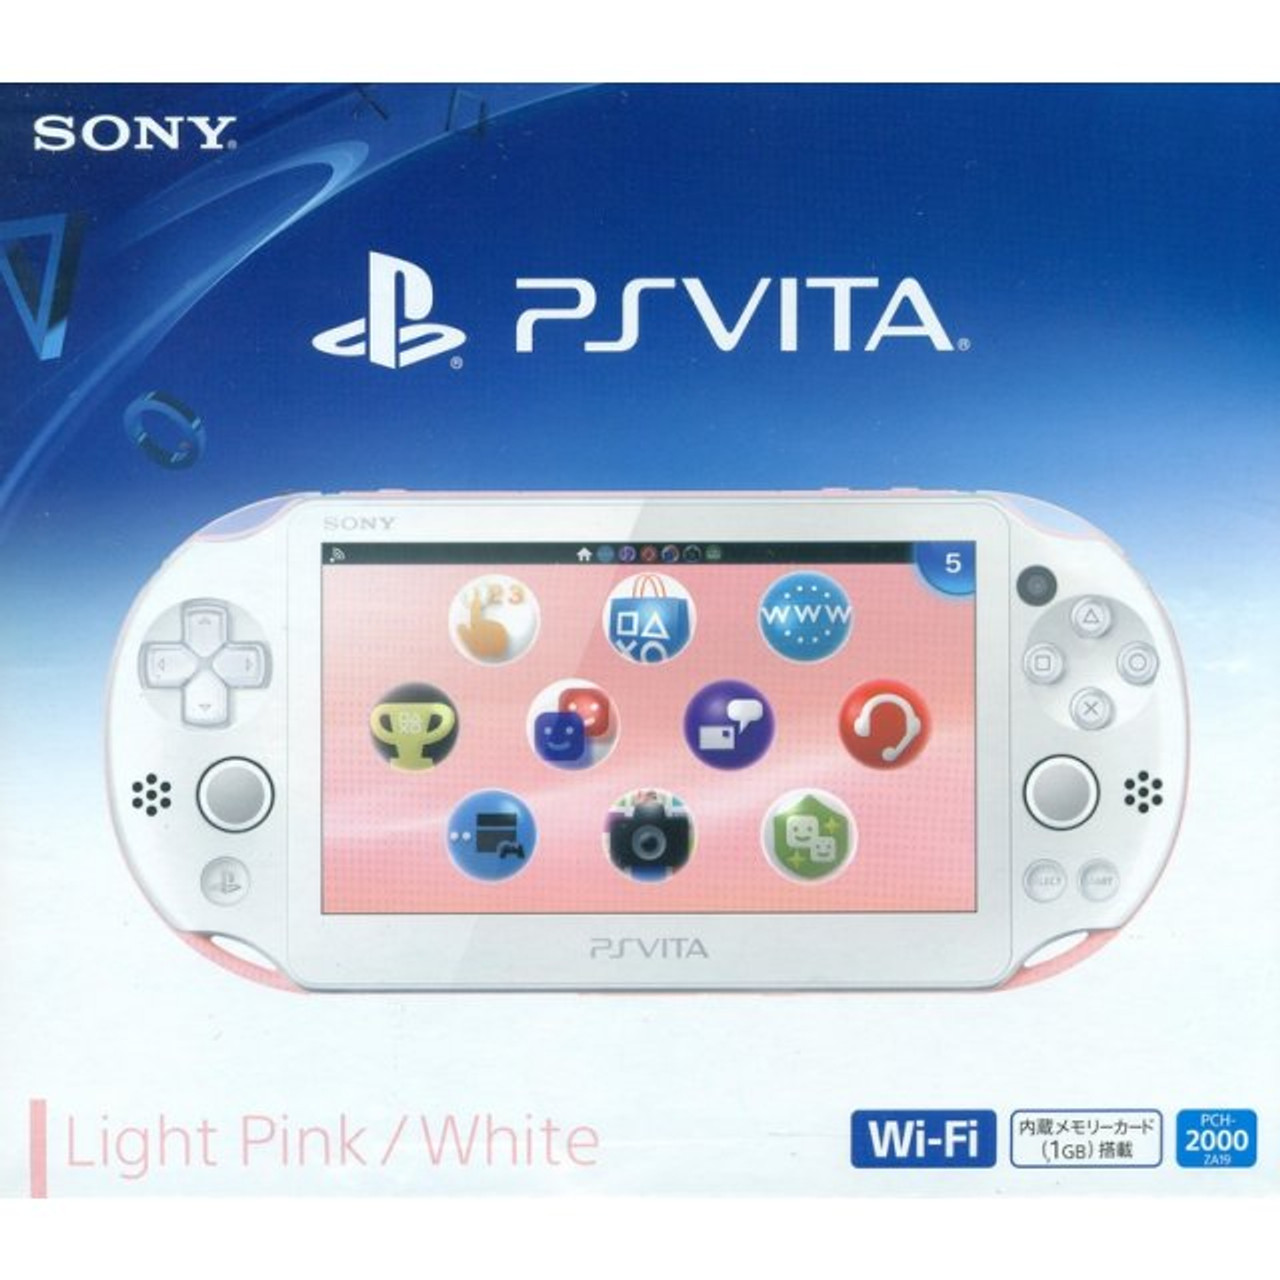 PS Vita Slim 2000 [LITE PINK / WHITE], PlayStation Vita